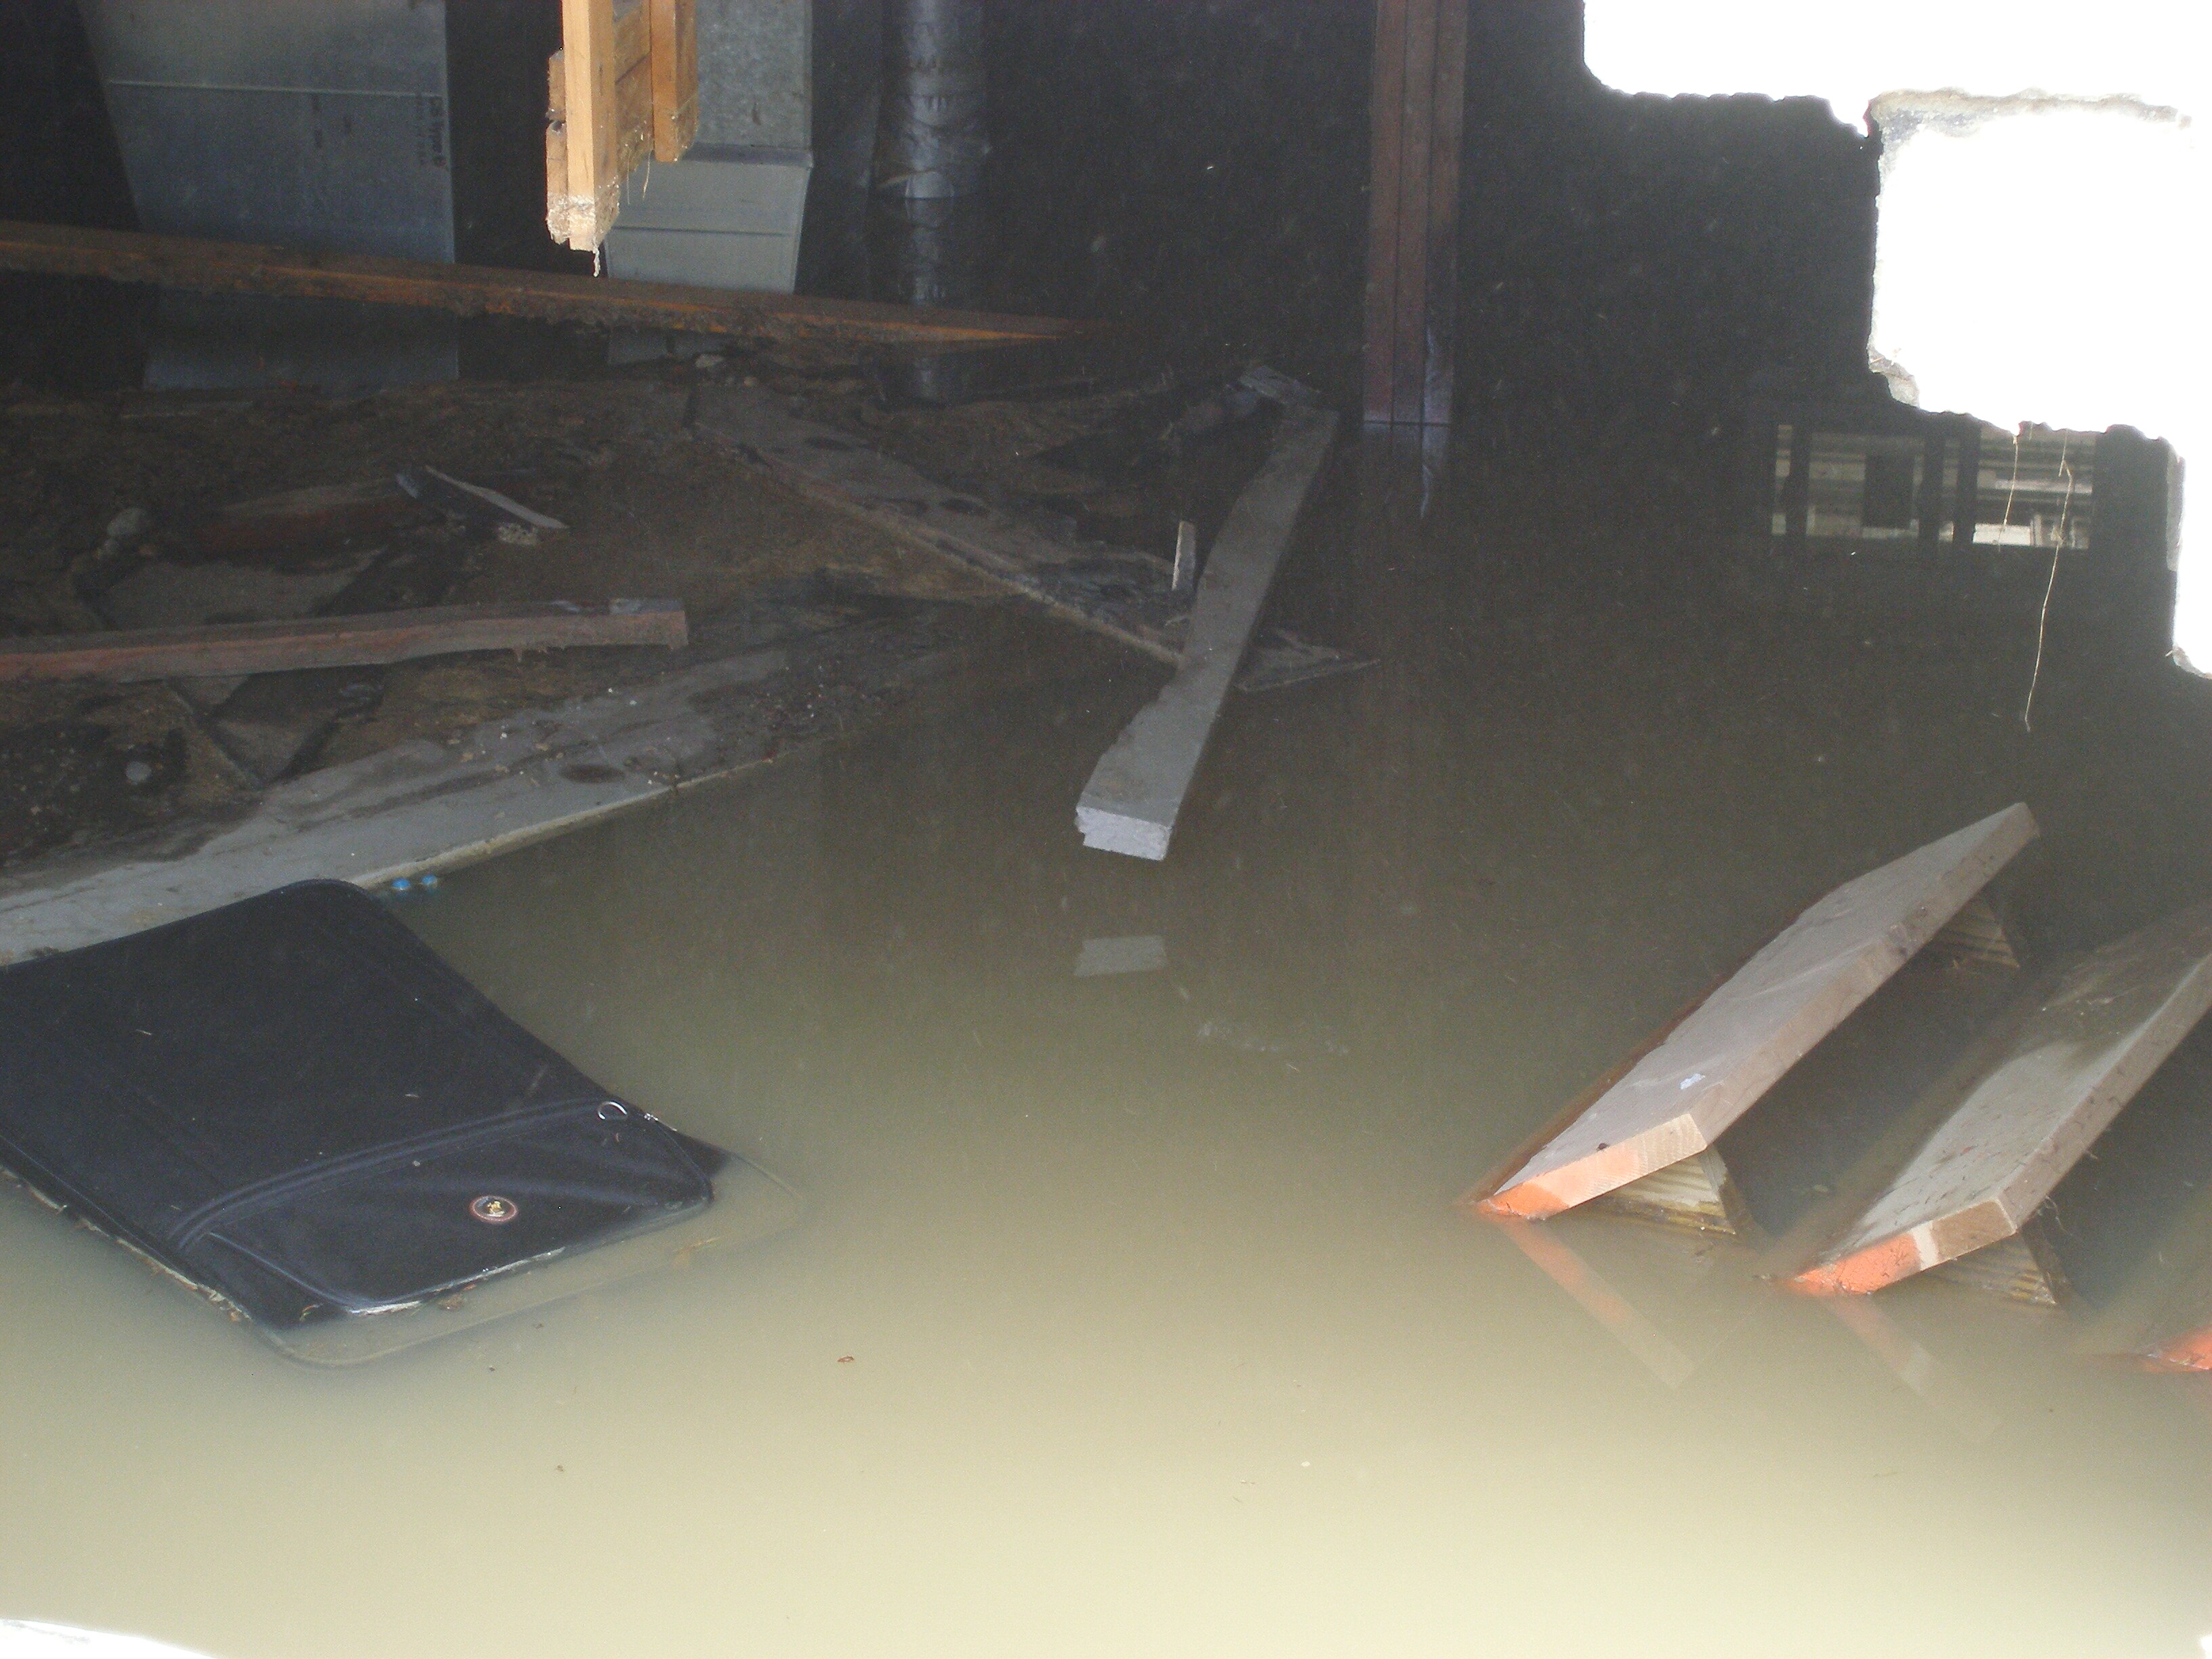 07-01-06  Reponse - Flooding